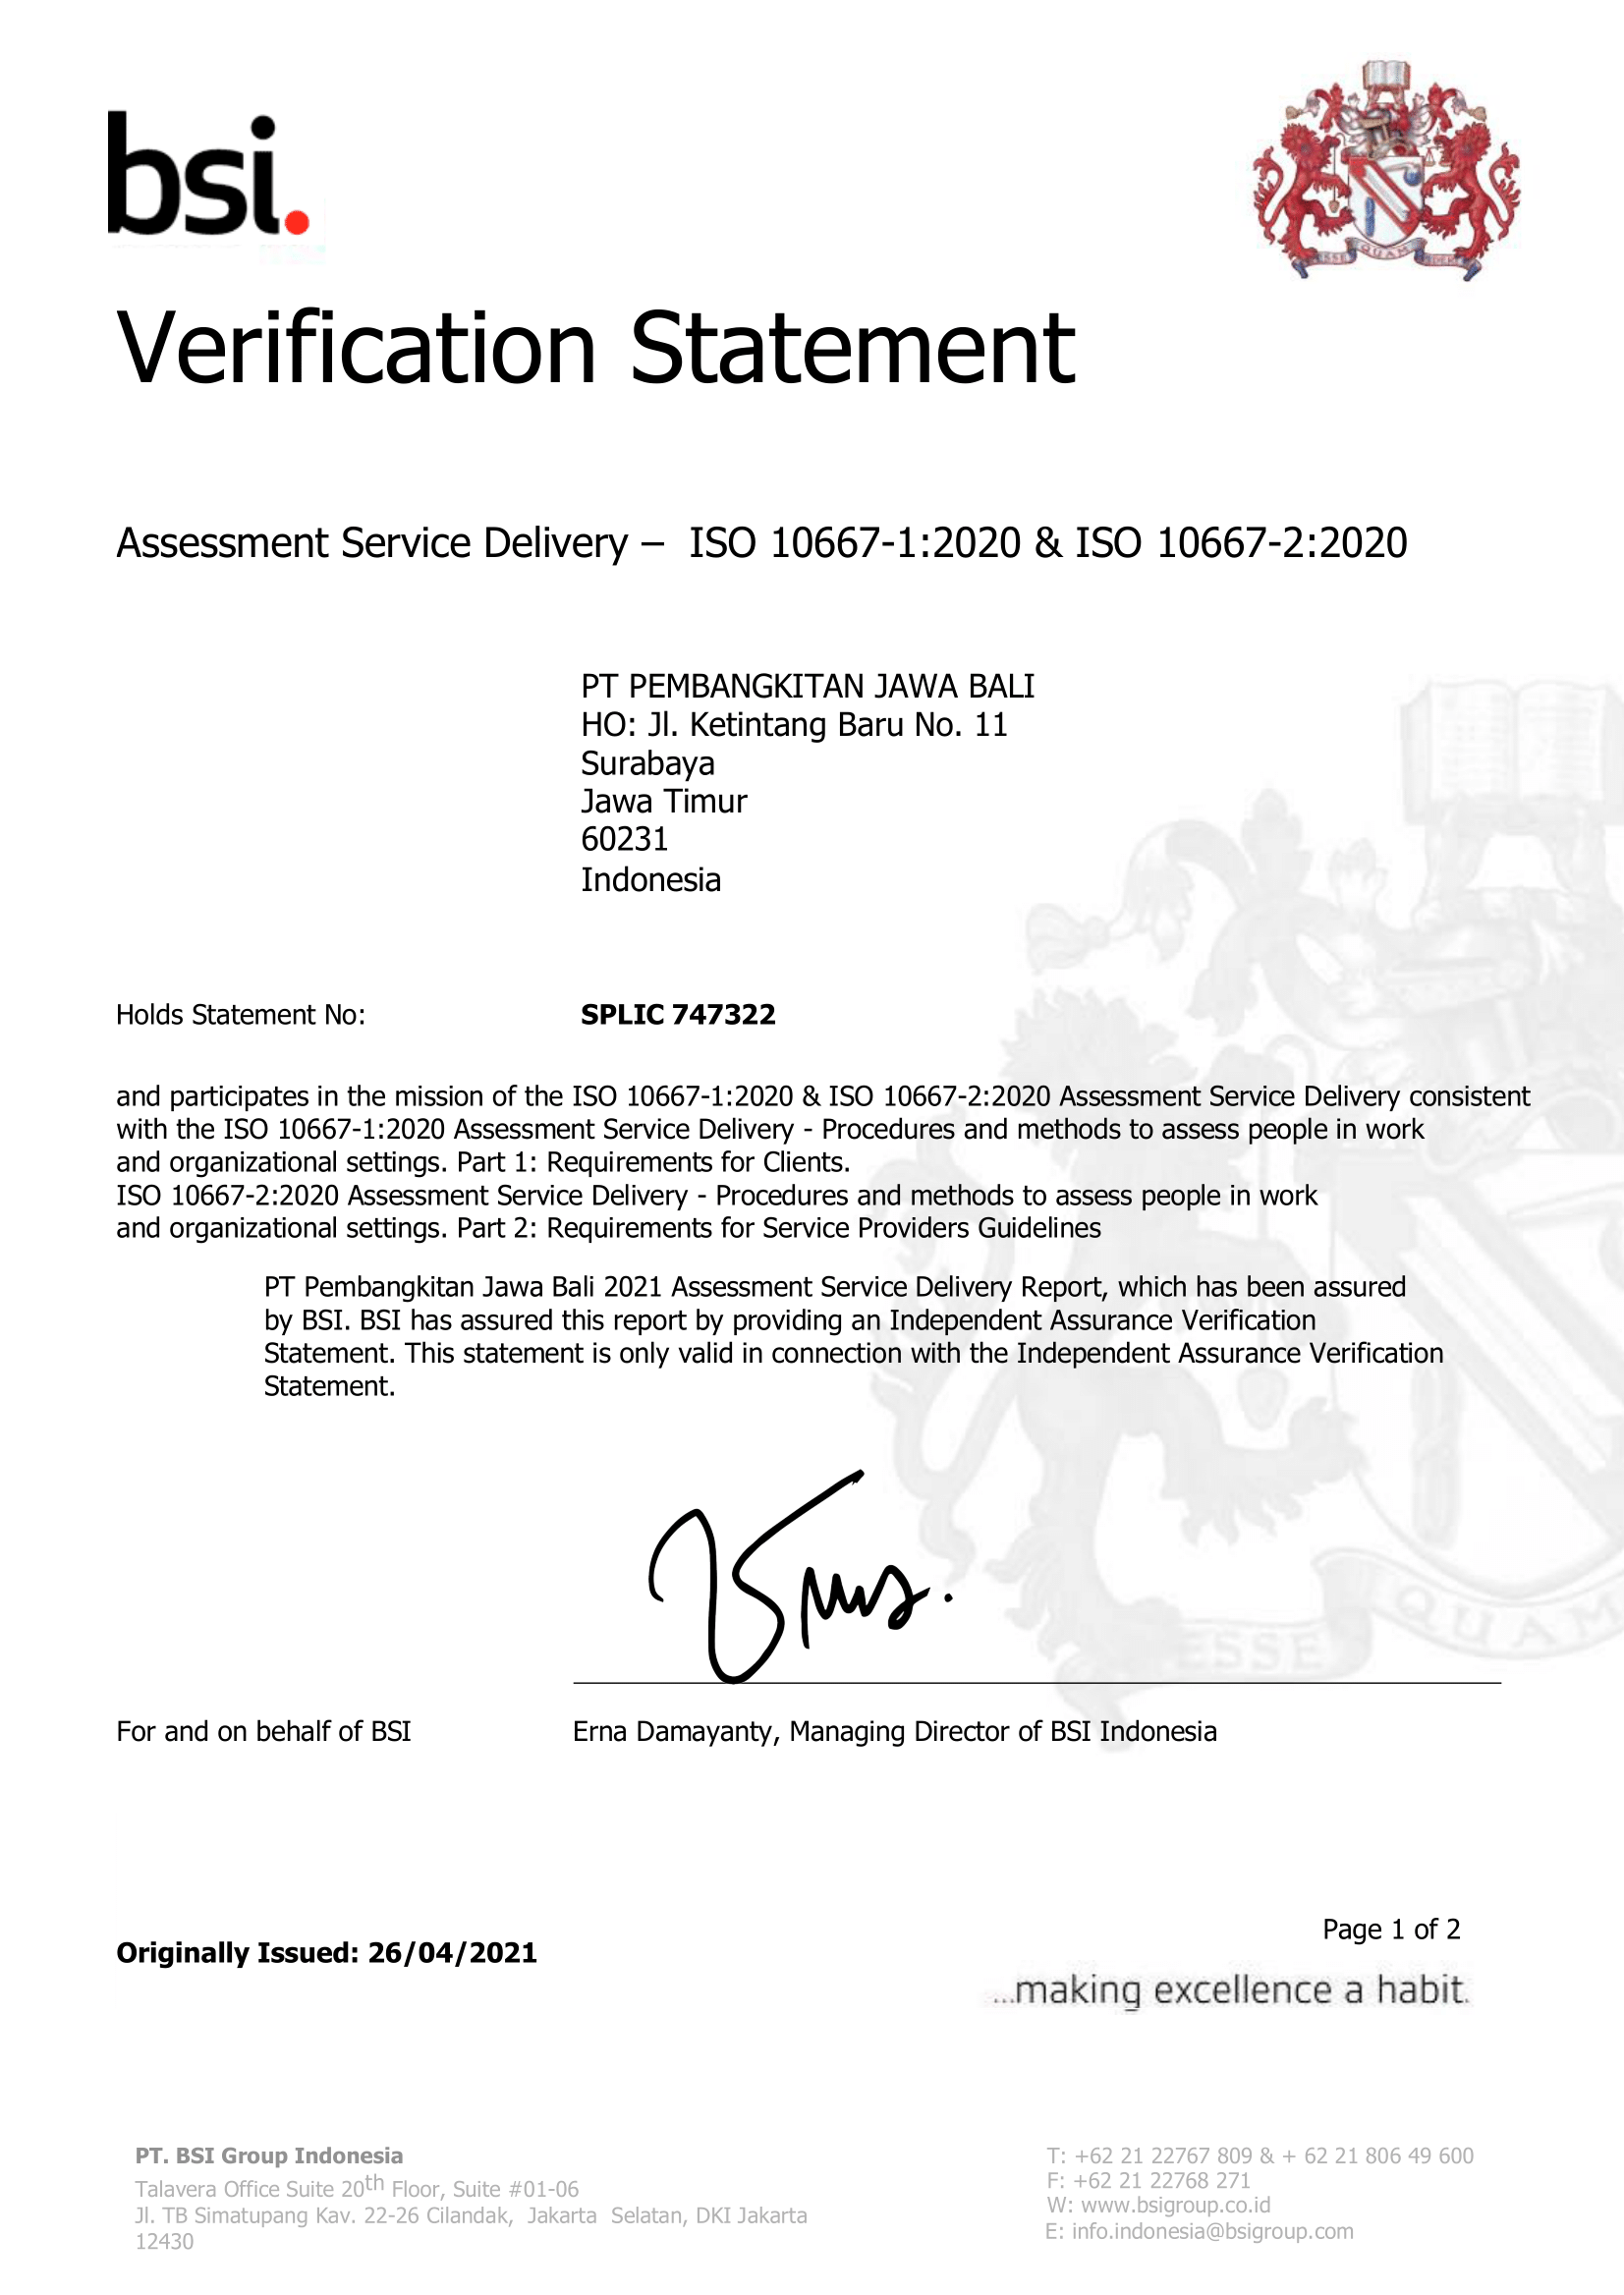 ISO 10667 PJB Verification Statement (260421)-1